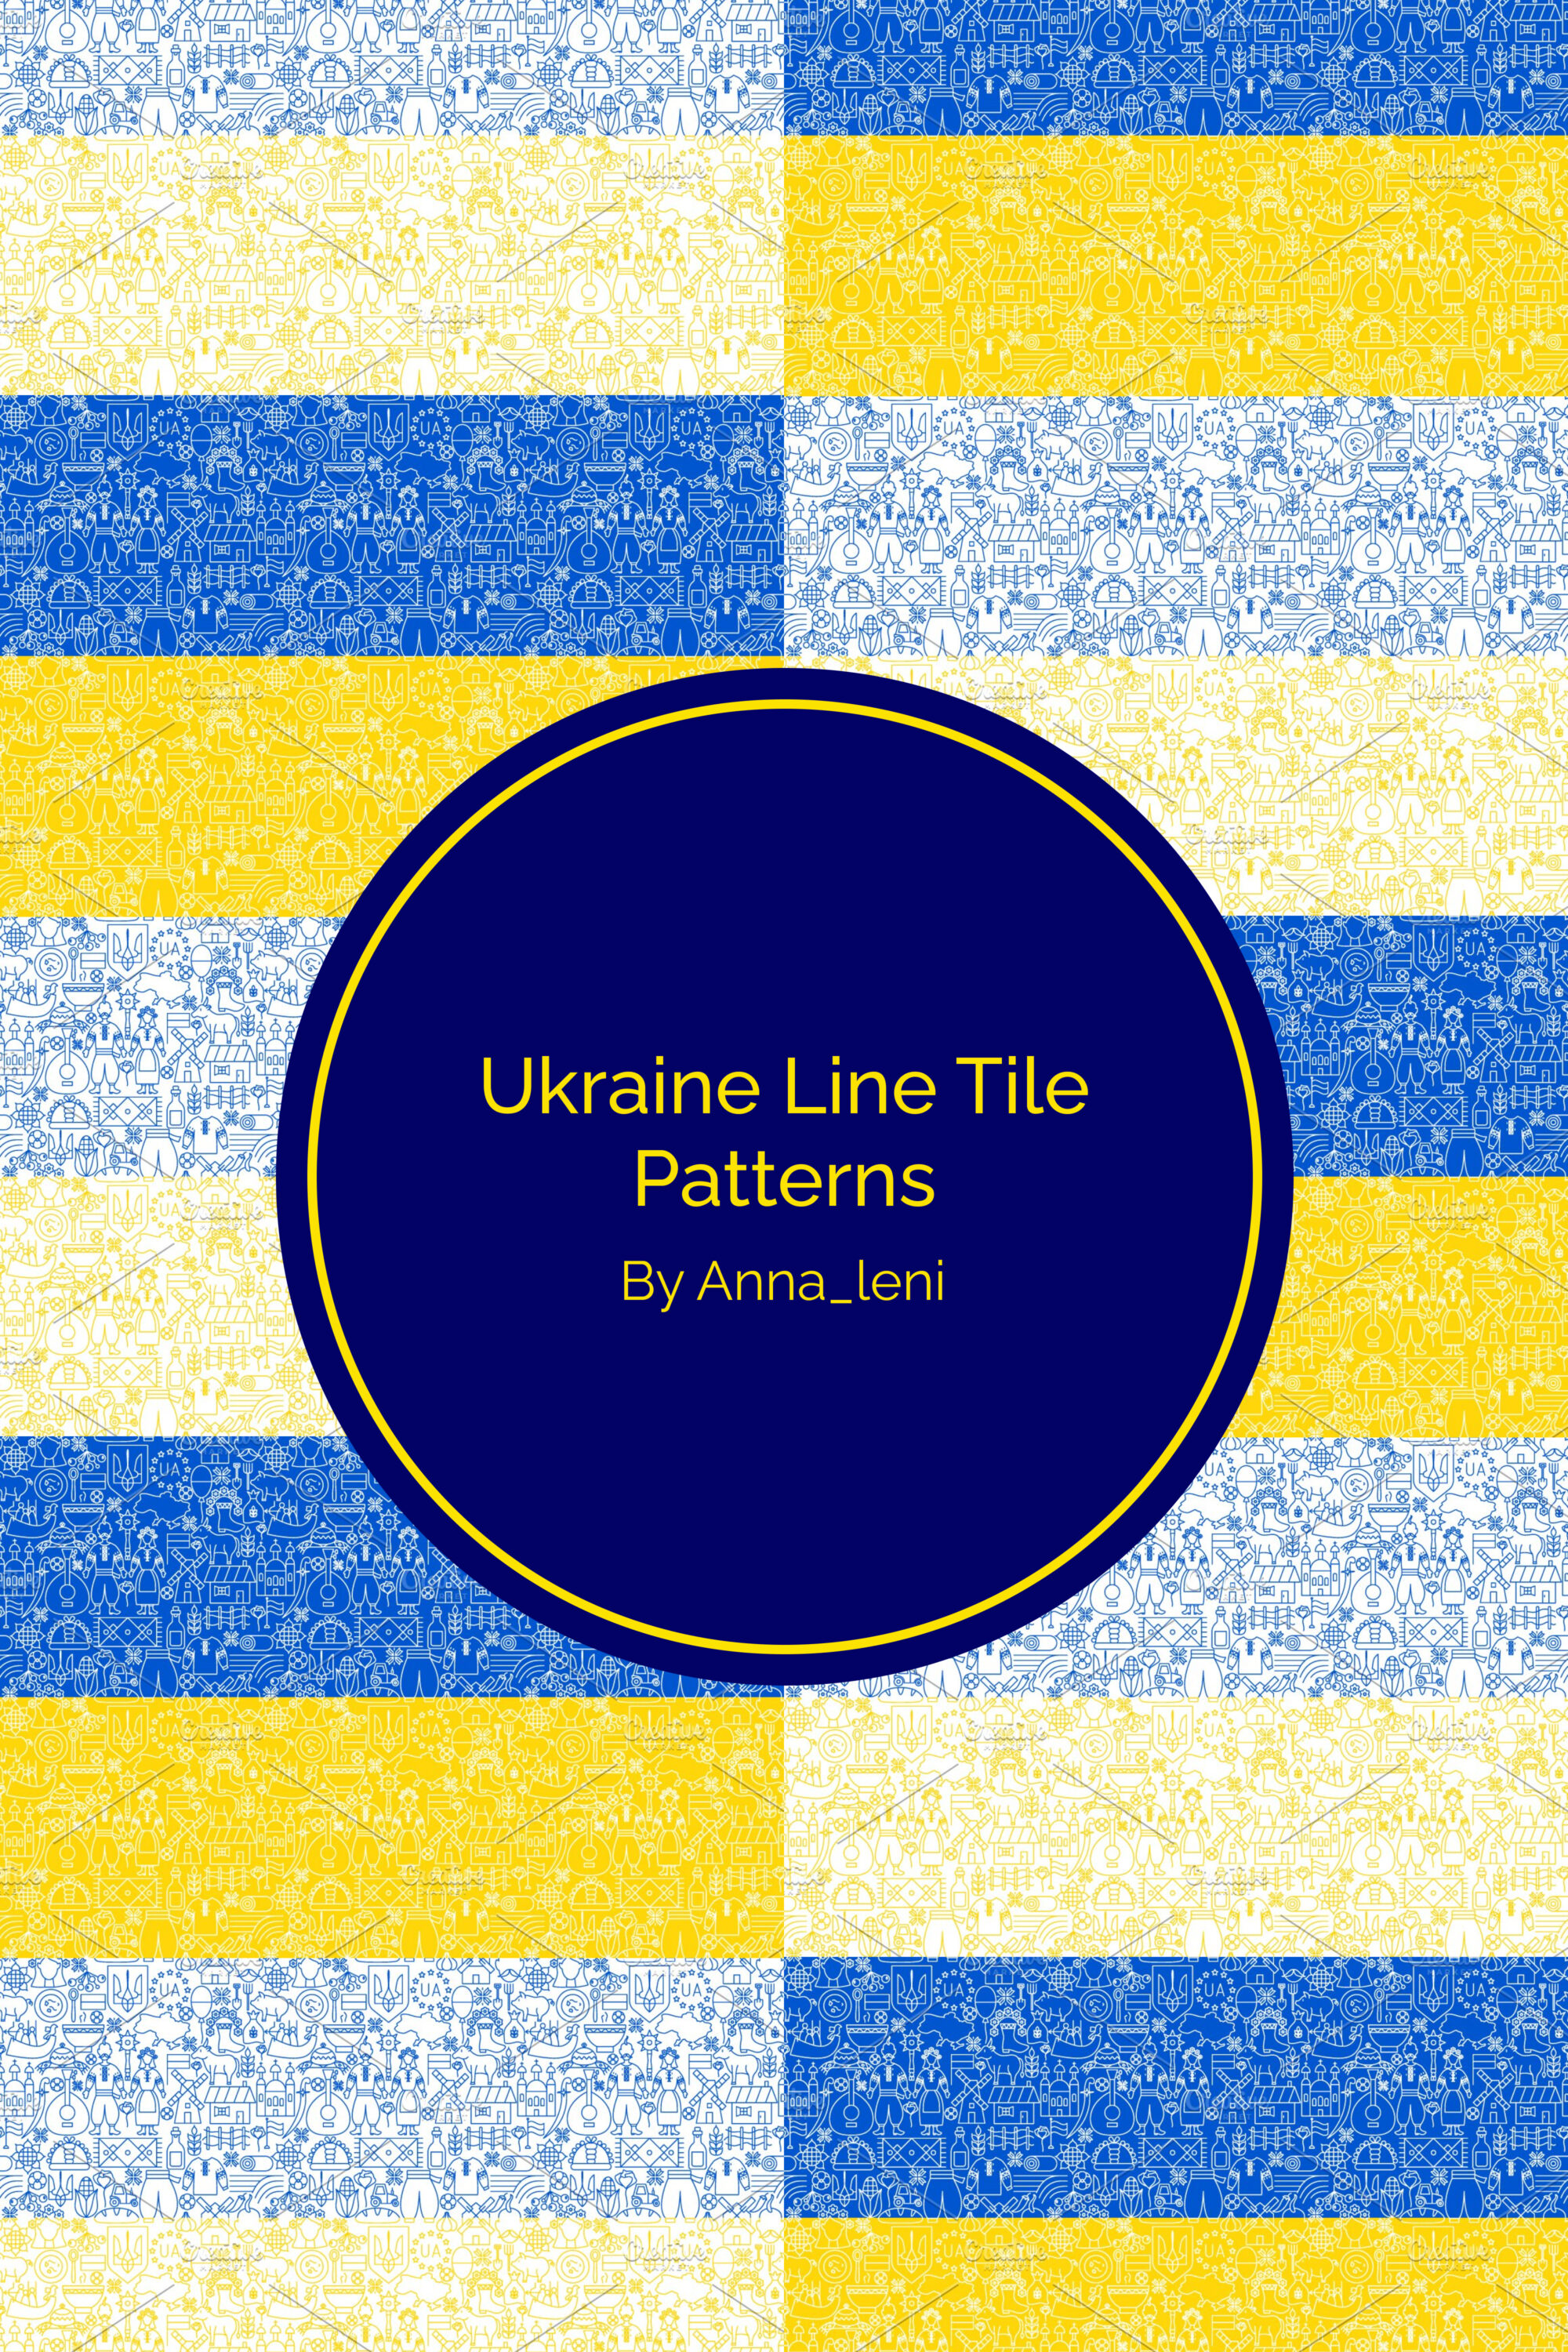 Ukraine line tile patterns of pinterest.